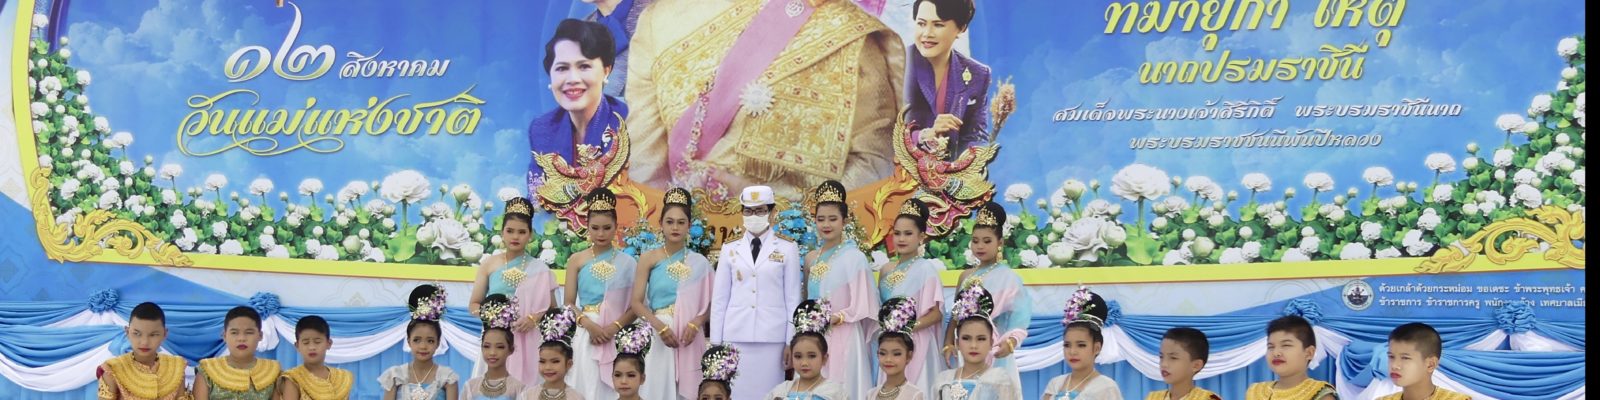 91e anniversaire reine Sirikit de Thaïlande